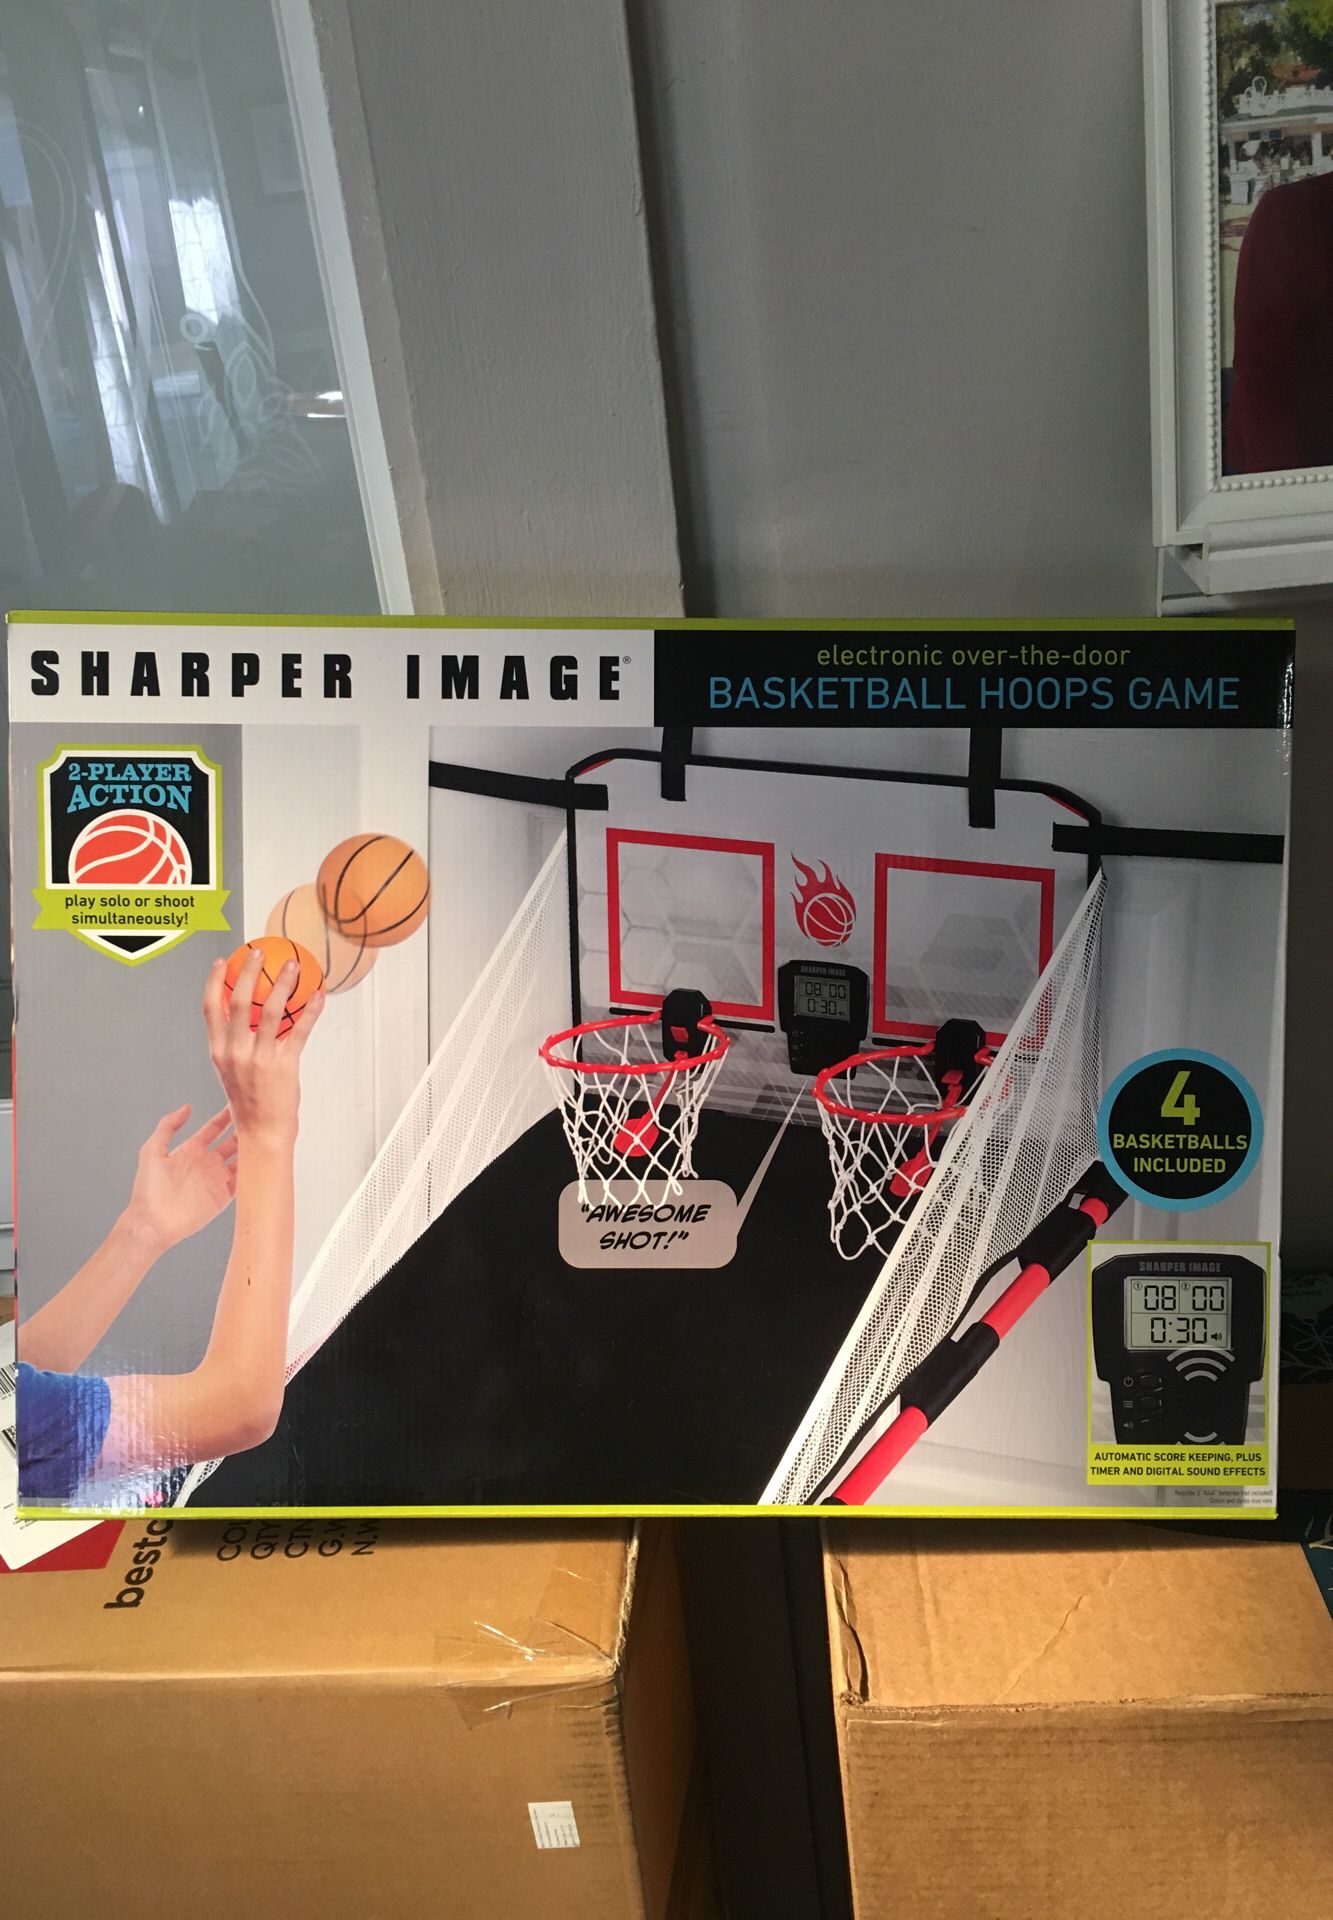 Sharper image electronic basketball hoops game